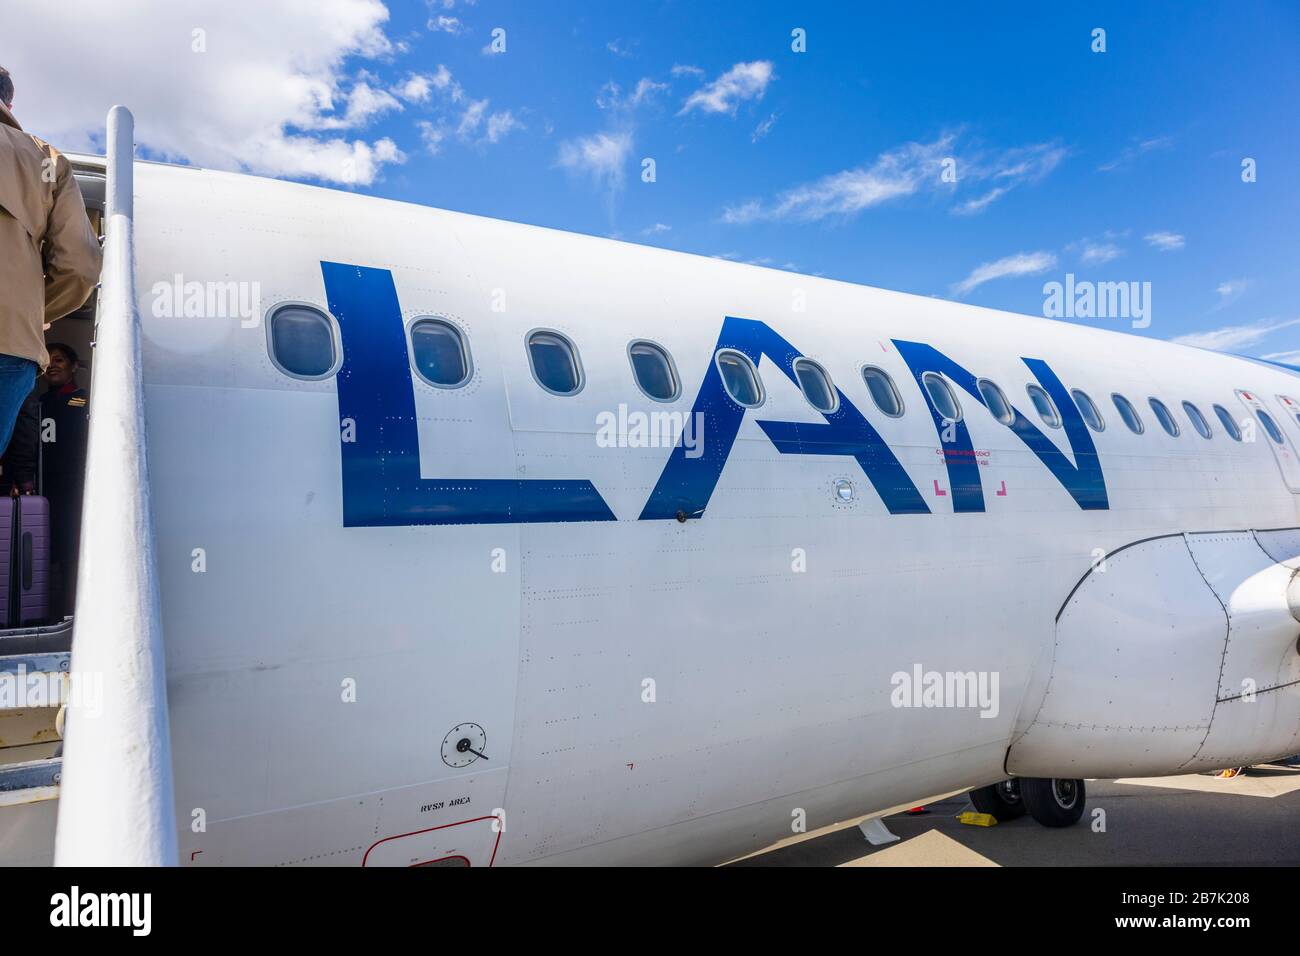 LAN (LATAM Airlines) sulla pista dell'aeroporto Teniente Julio Gallardo che serve Puerto Natales, Regione Magallanes della Patagonia, Cile meridionale Foto Stock